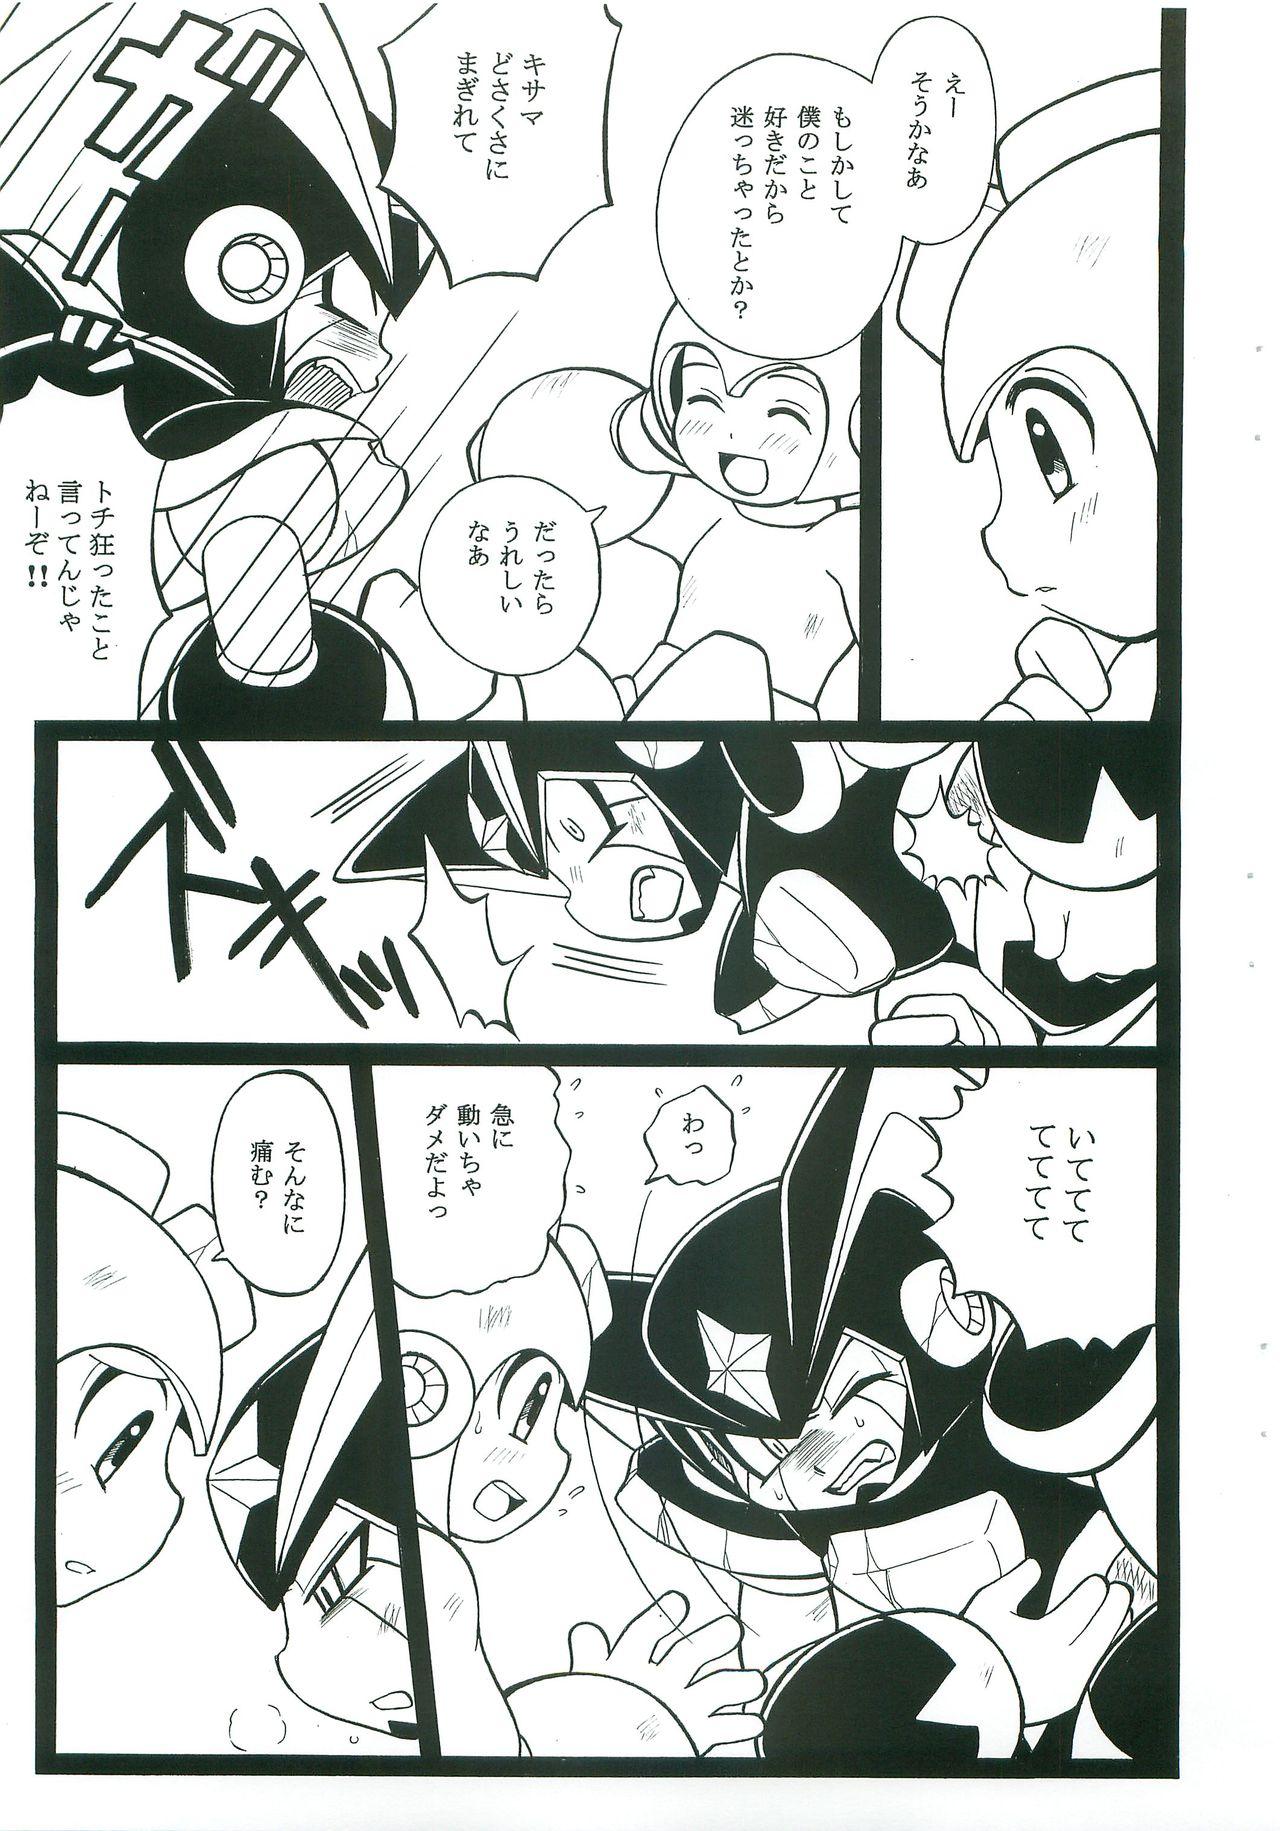 Pau Grande appassionato - Megaman Chudai - Page 4